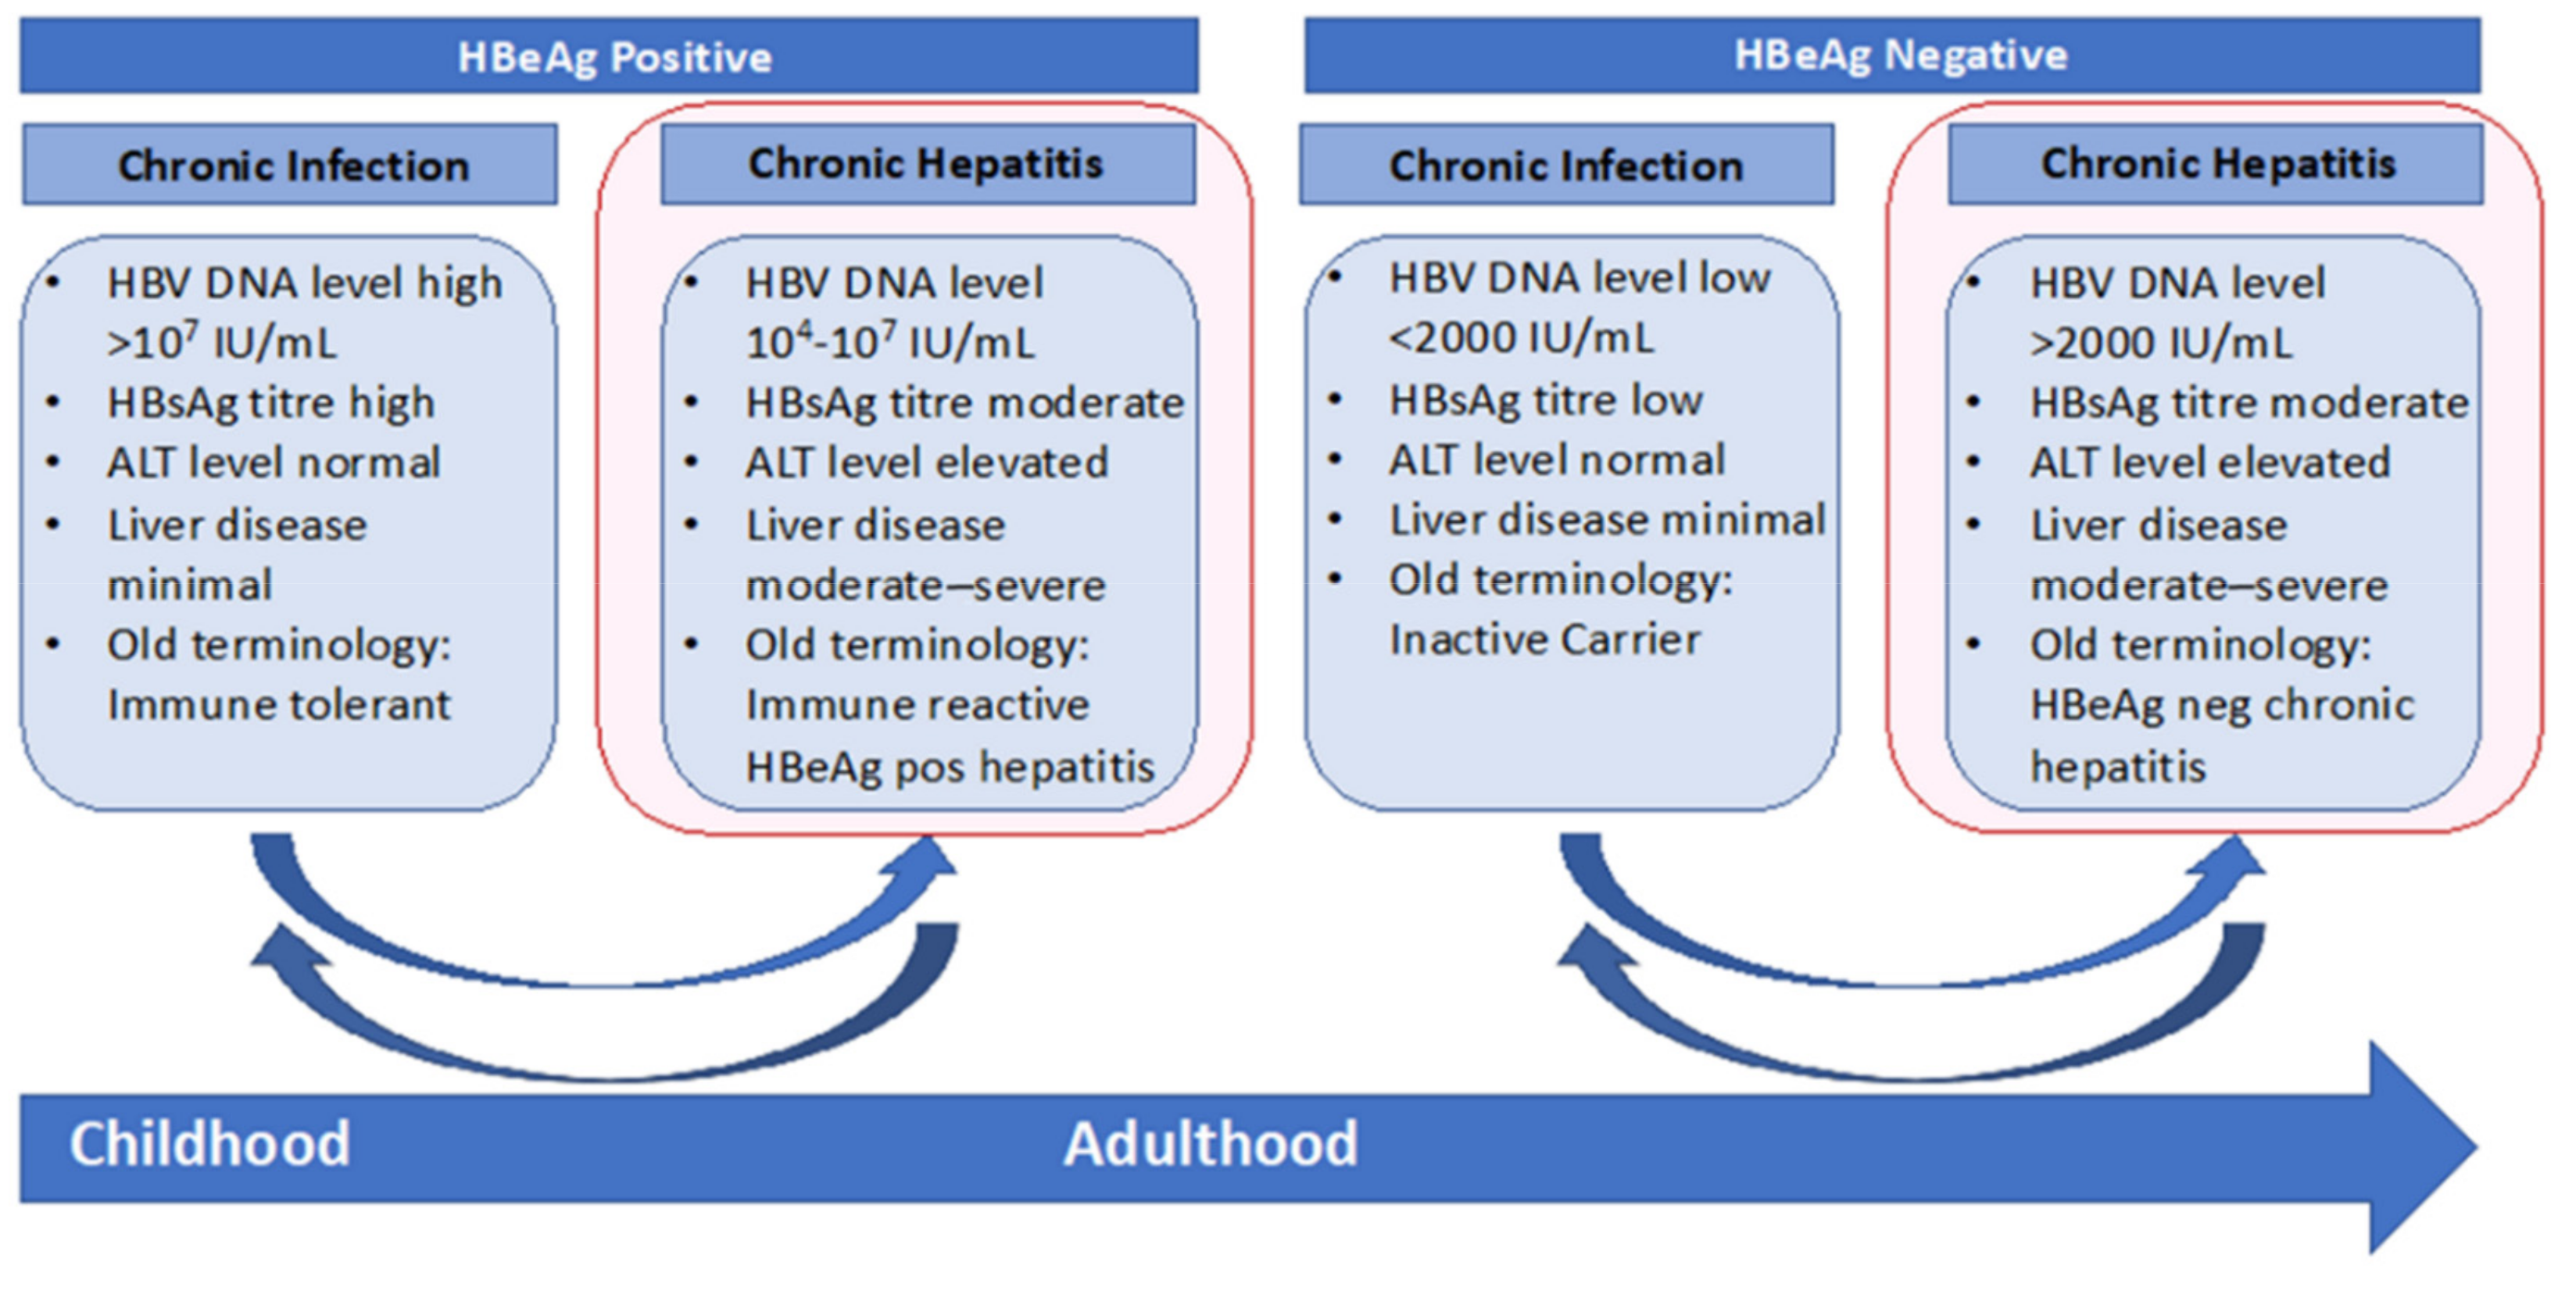 hepatitis b treatment guidelines